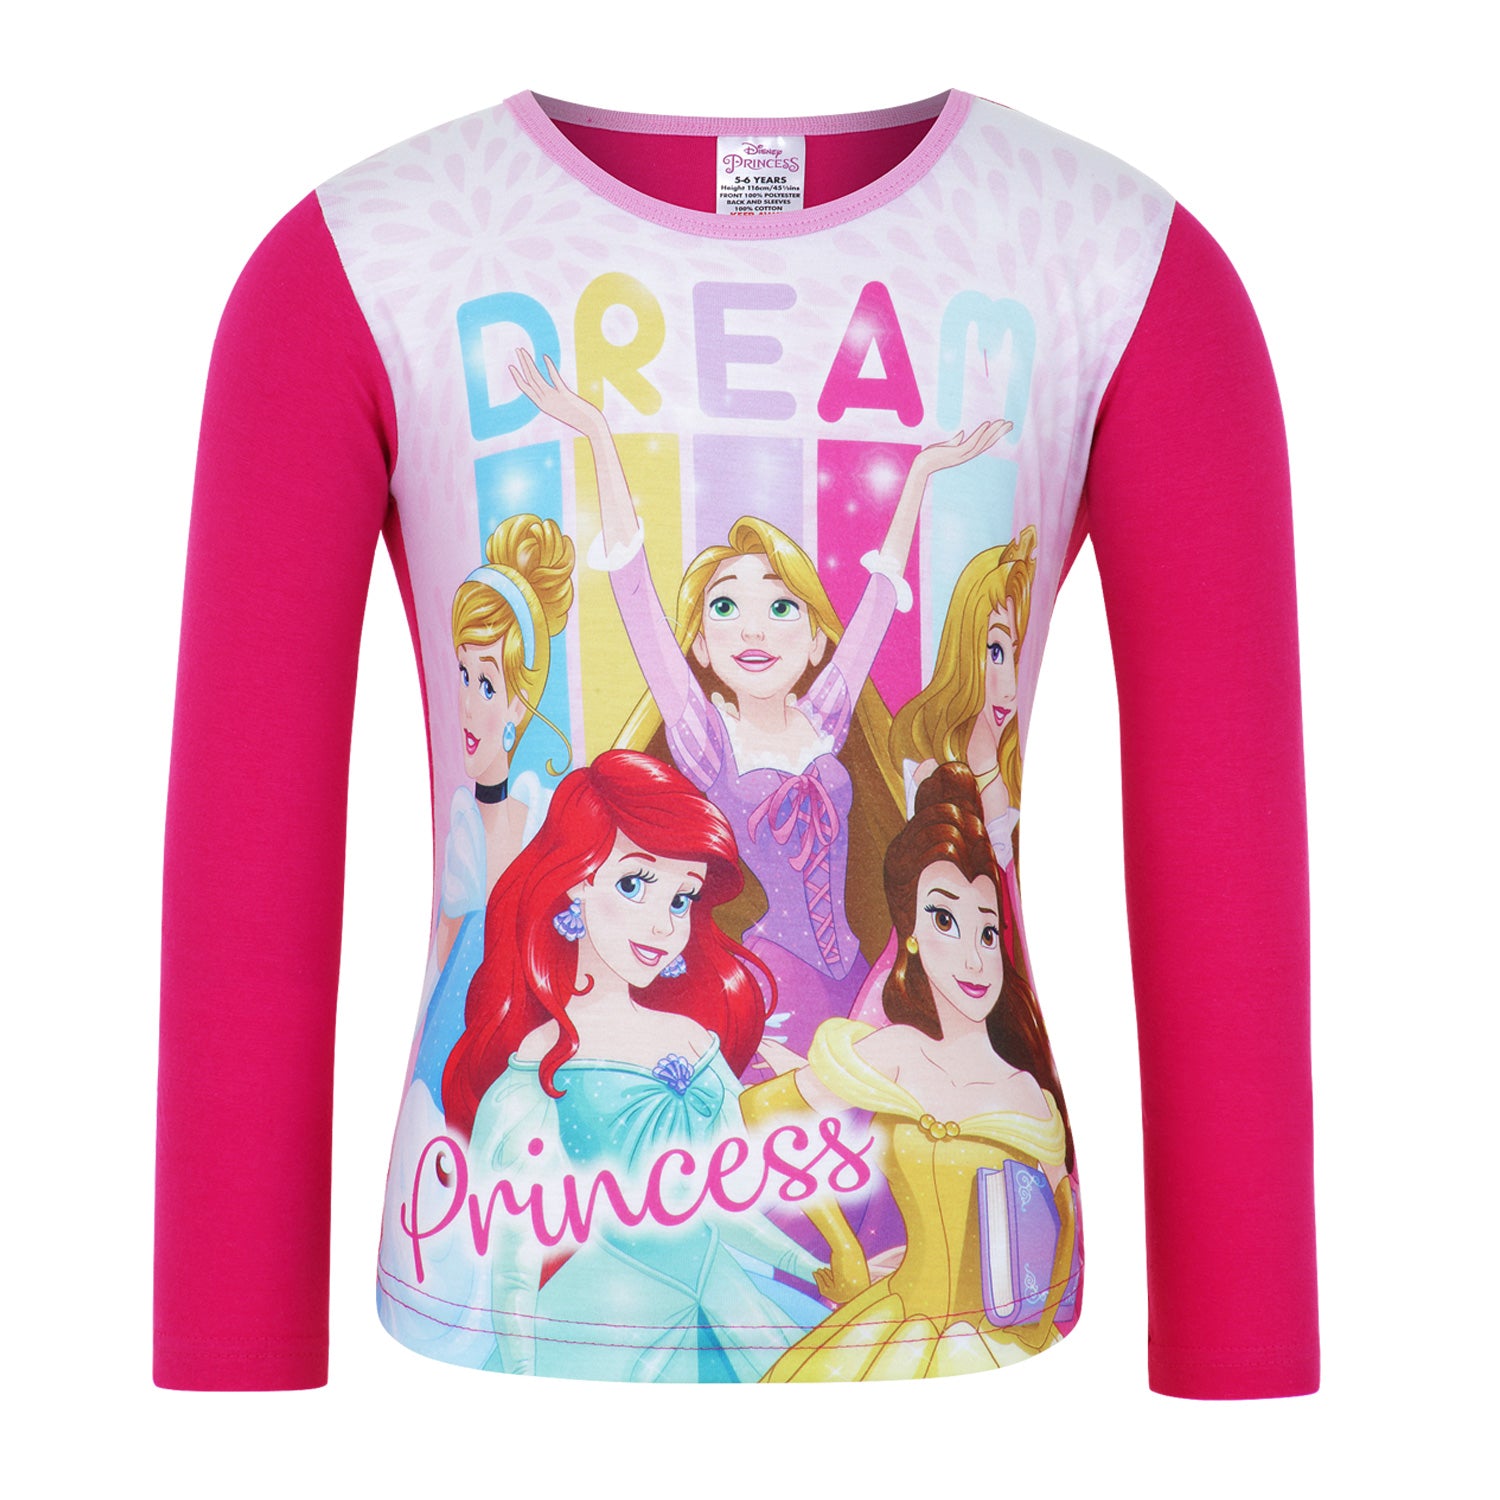 Girls Disney Princess Dreams Pyjamas Set Top